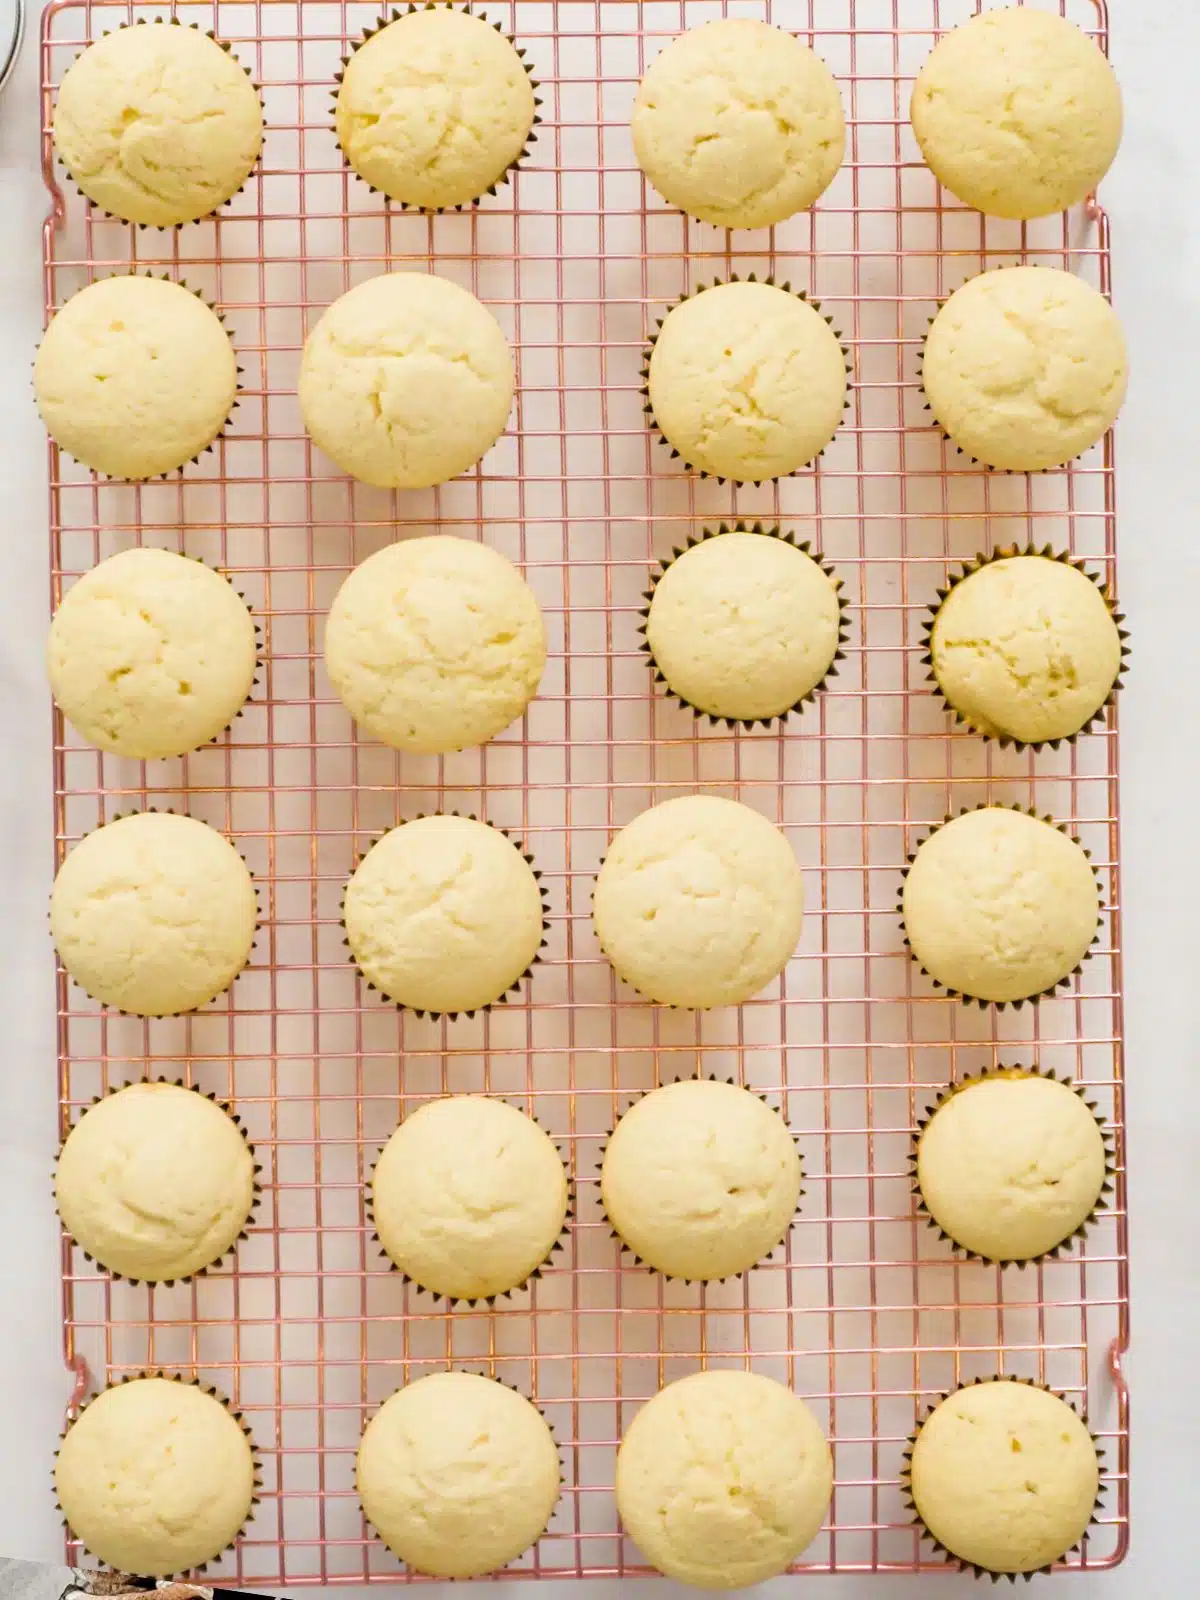 24 vanilla cake mix cupcakes on baking rack.